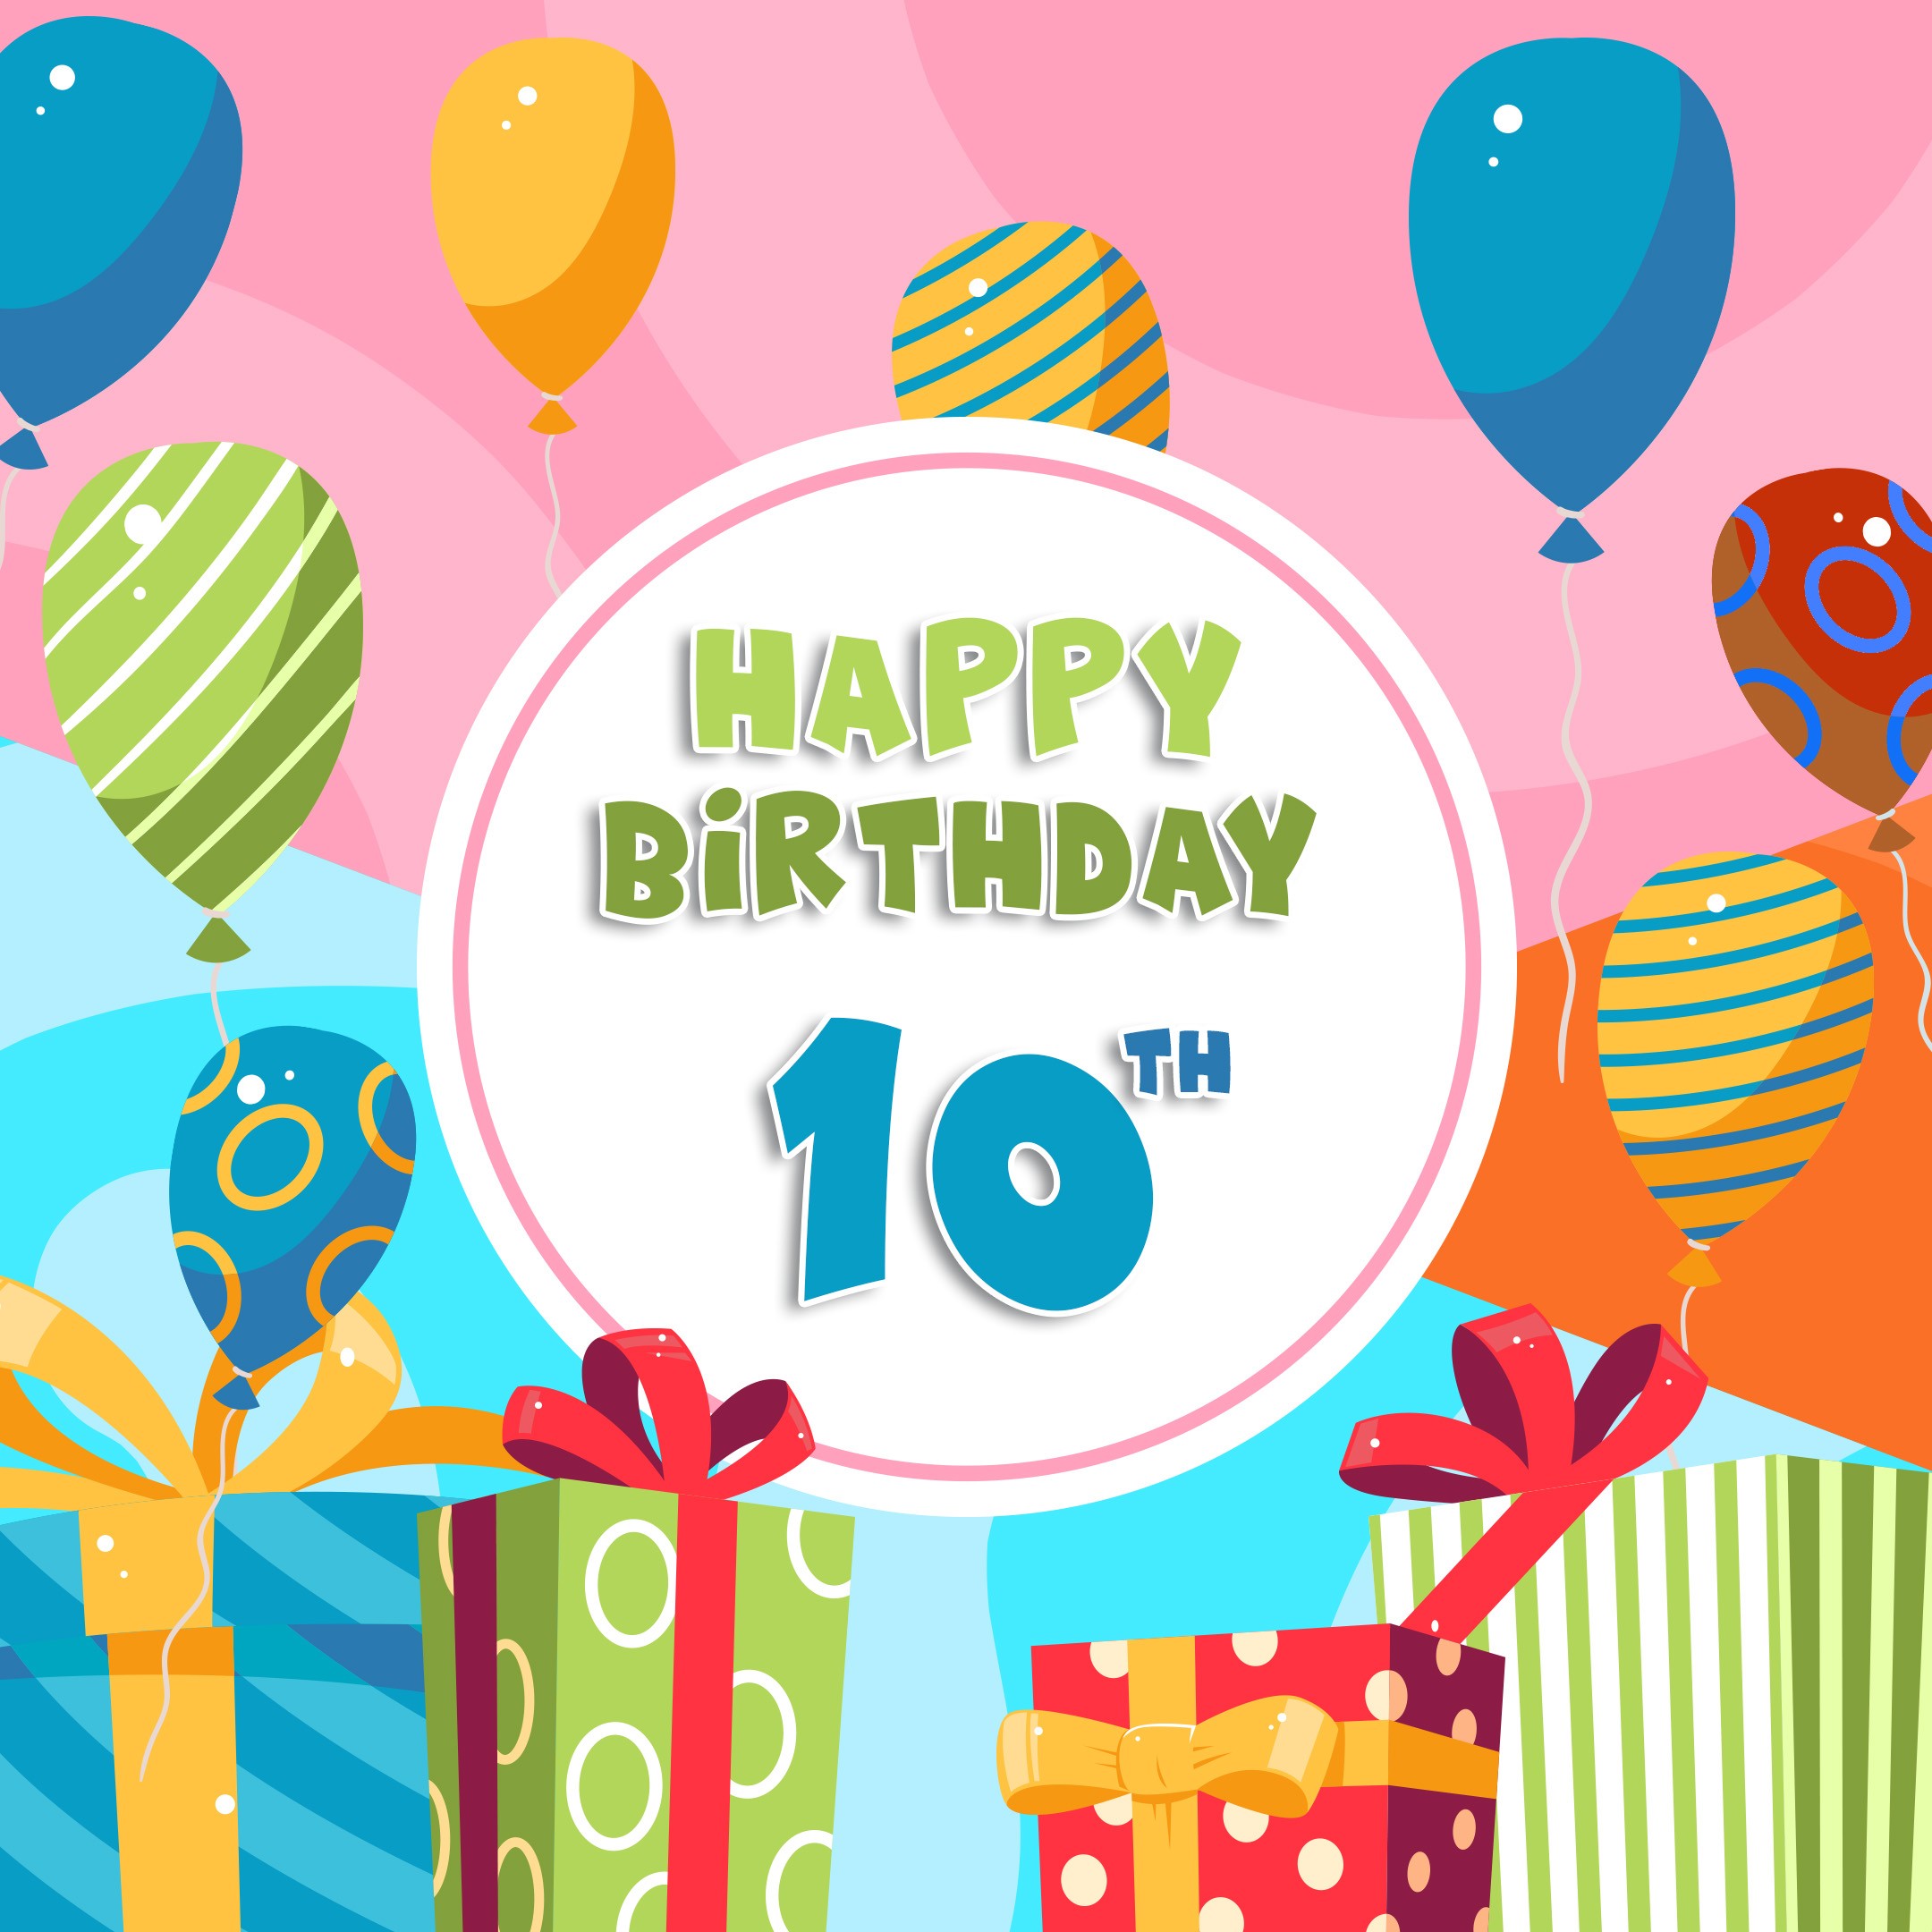 Free 10th Years Happy Birthday Image With Balloons - birthdayimg.com